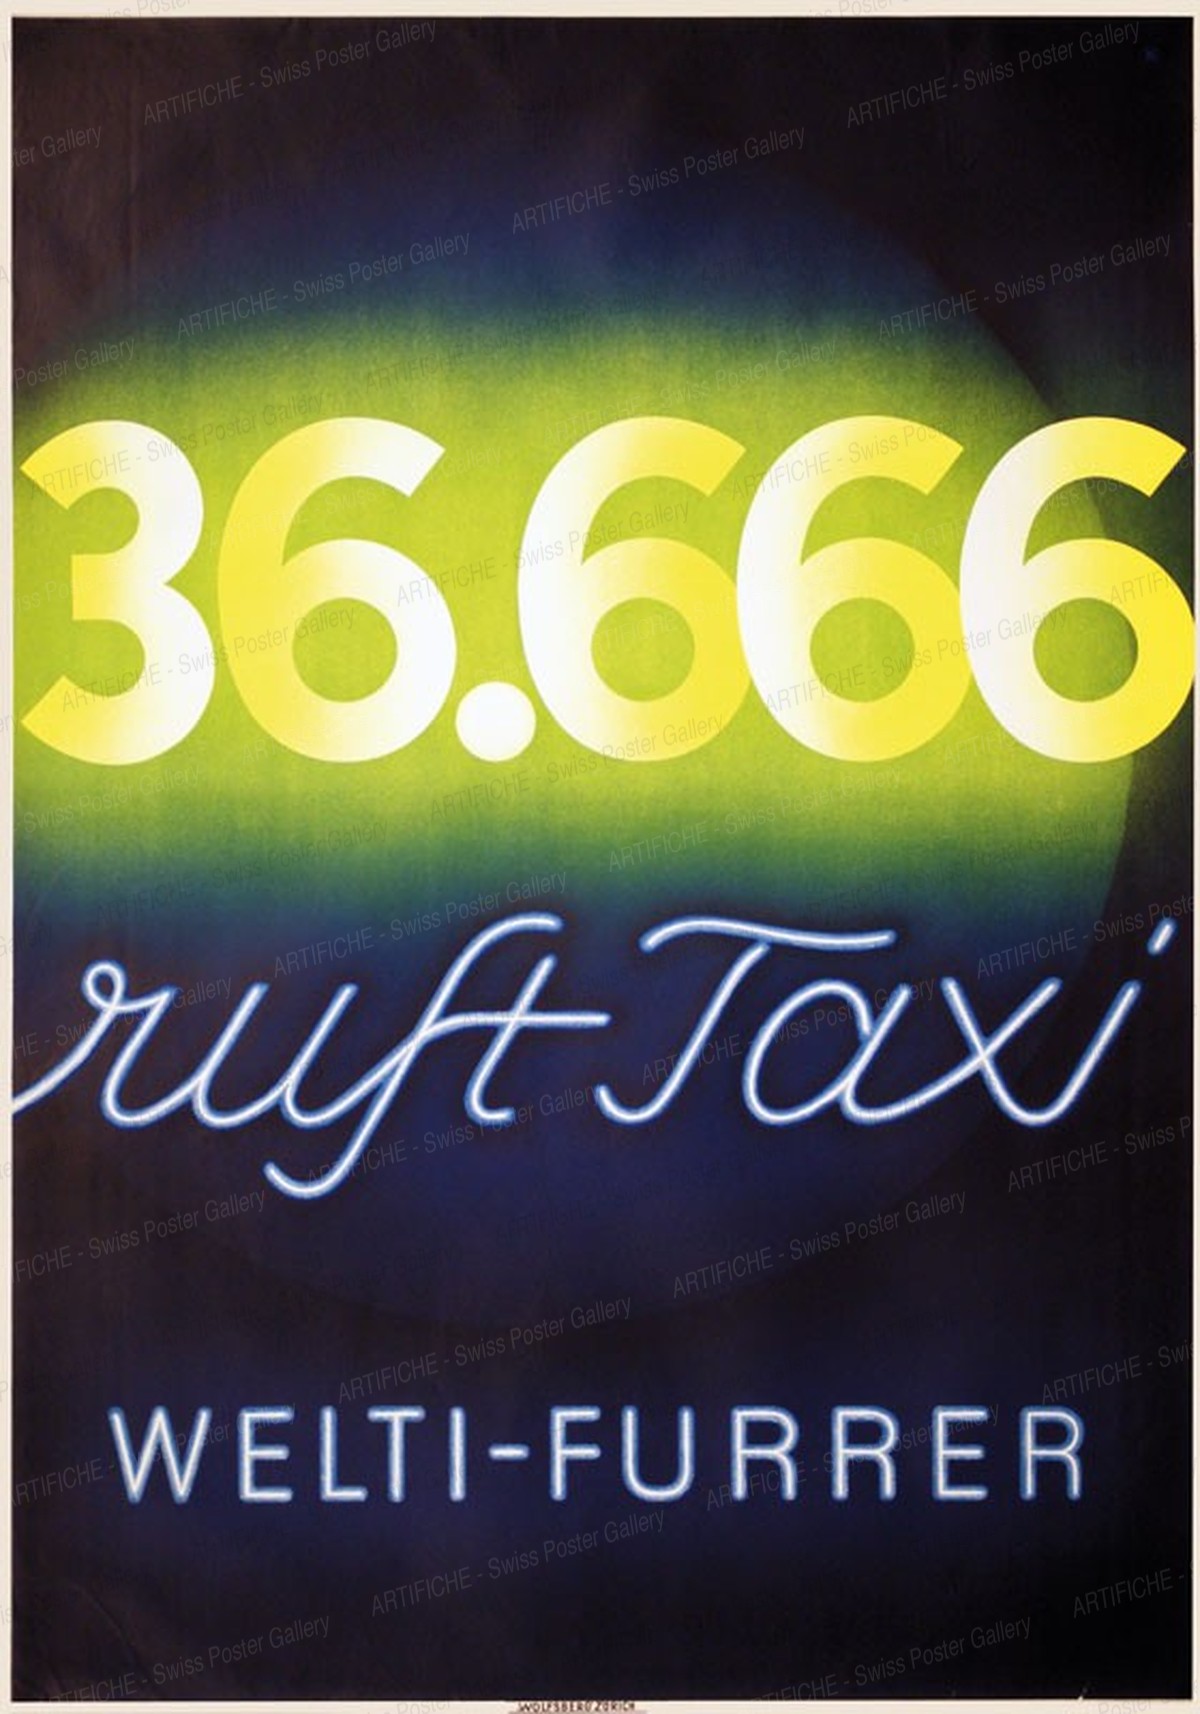 Welti-Furrer -36.666 ruft Taxi, Leo Keck